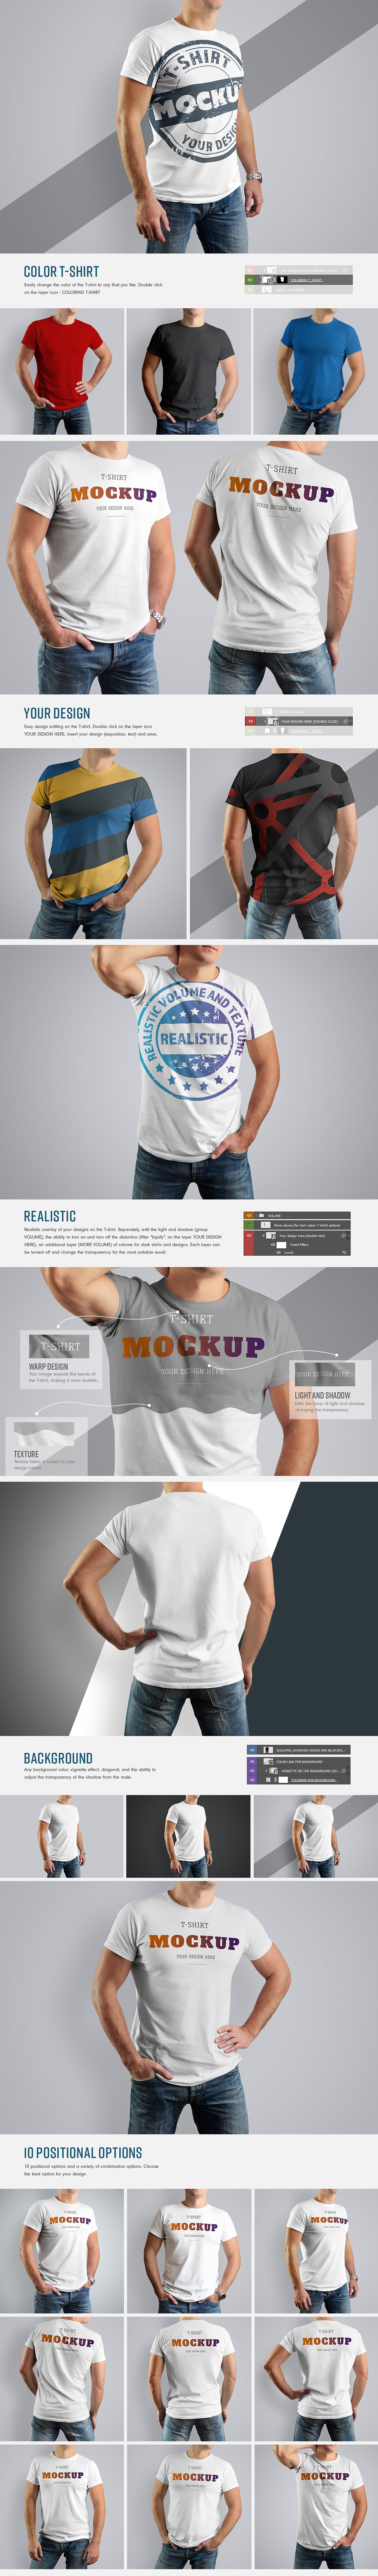 Free 3 x Realistic Mockup T-Shirt Templates